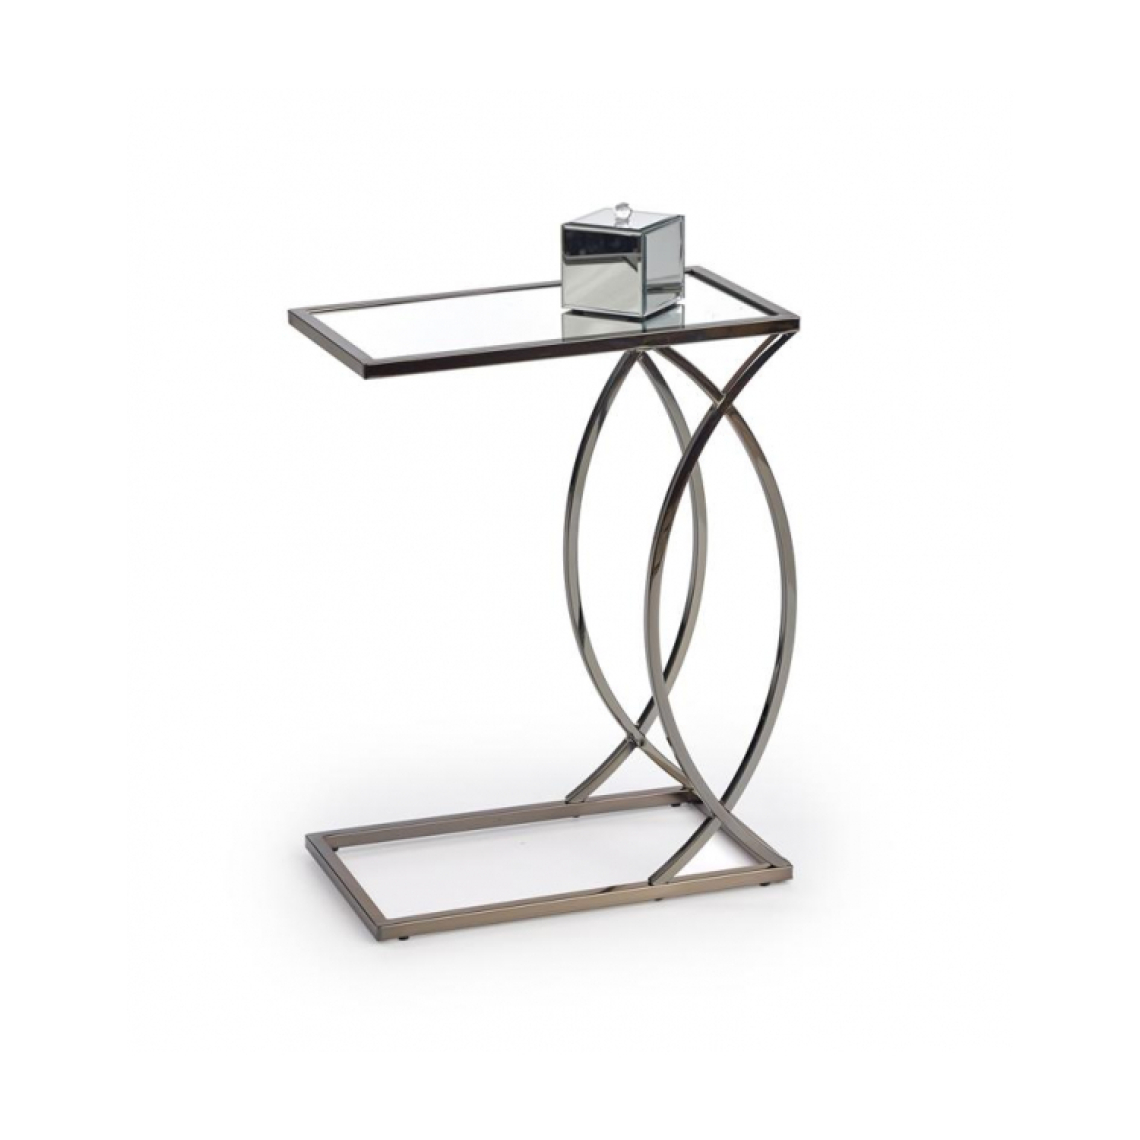 Carellia - Table basse design 25 cm x 46 cm x 60 cm - Miroir/Nickel - Tables basses